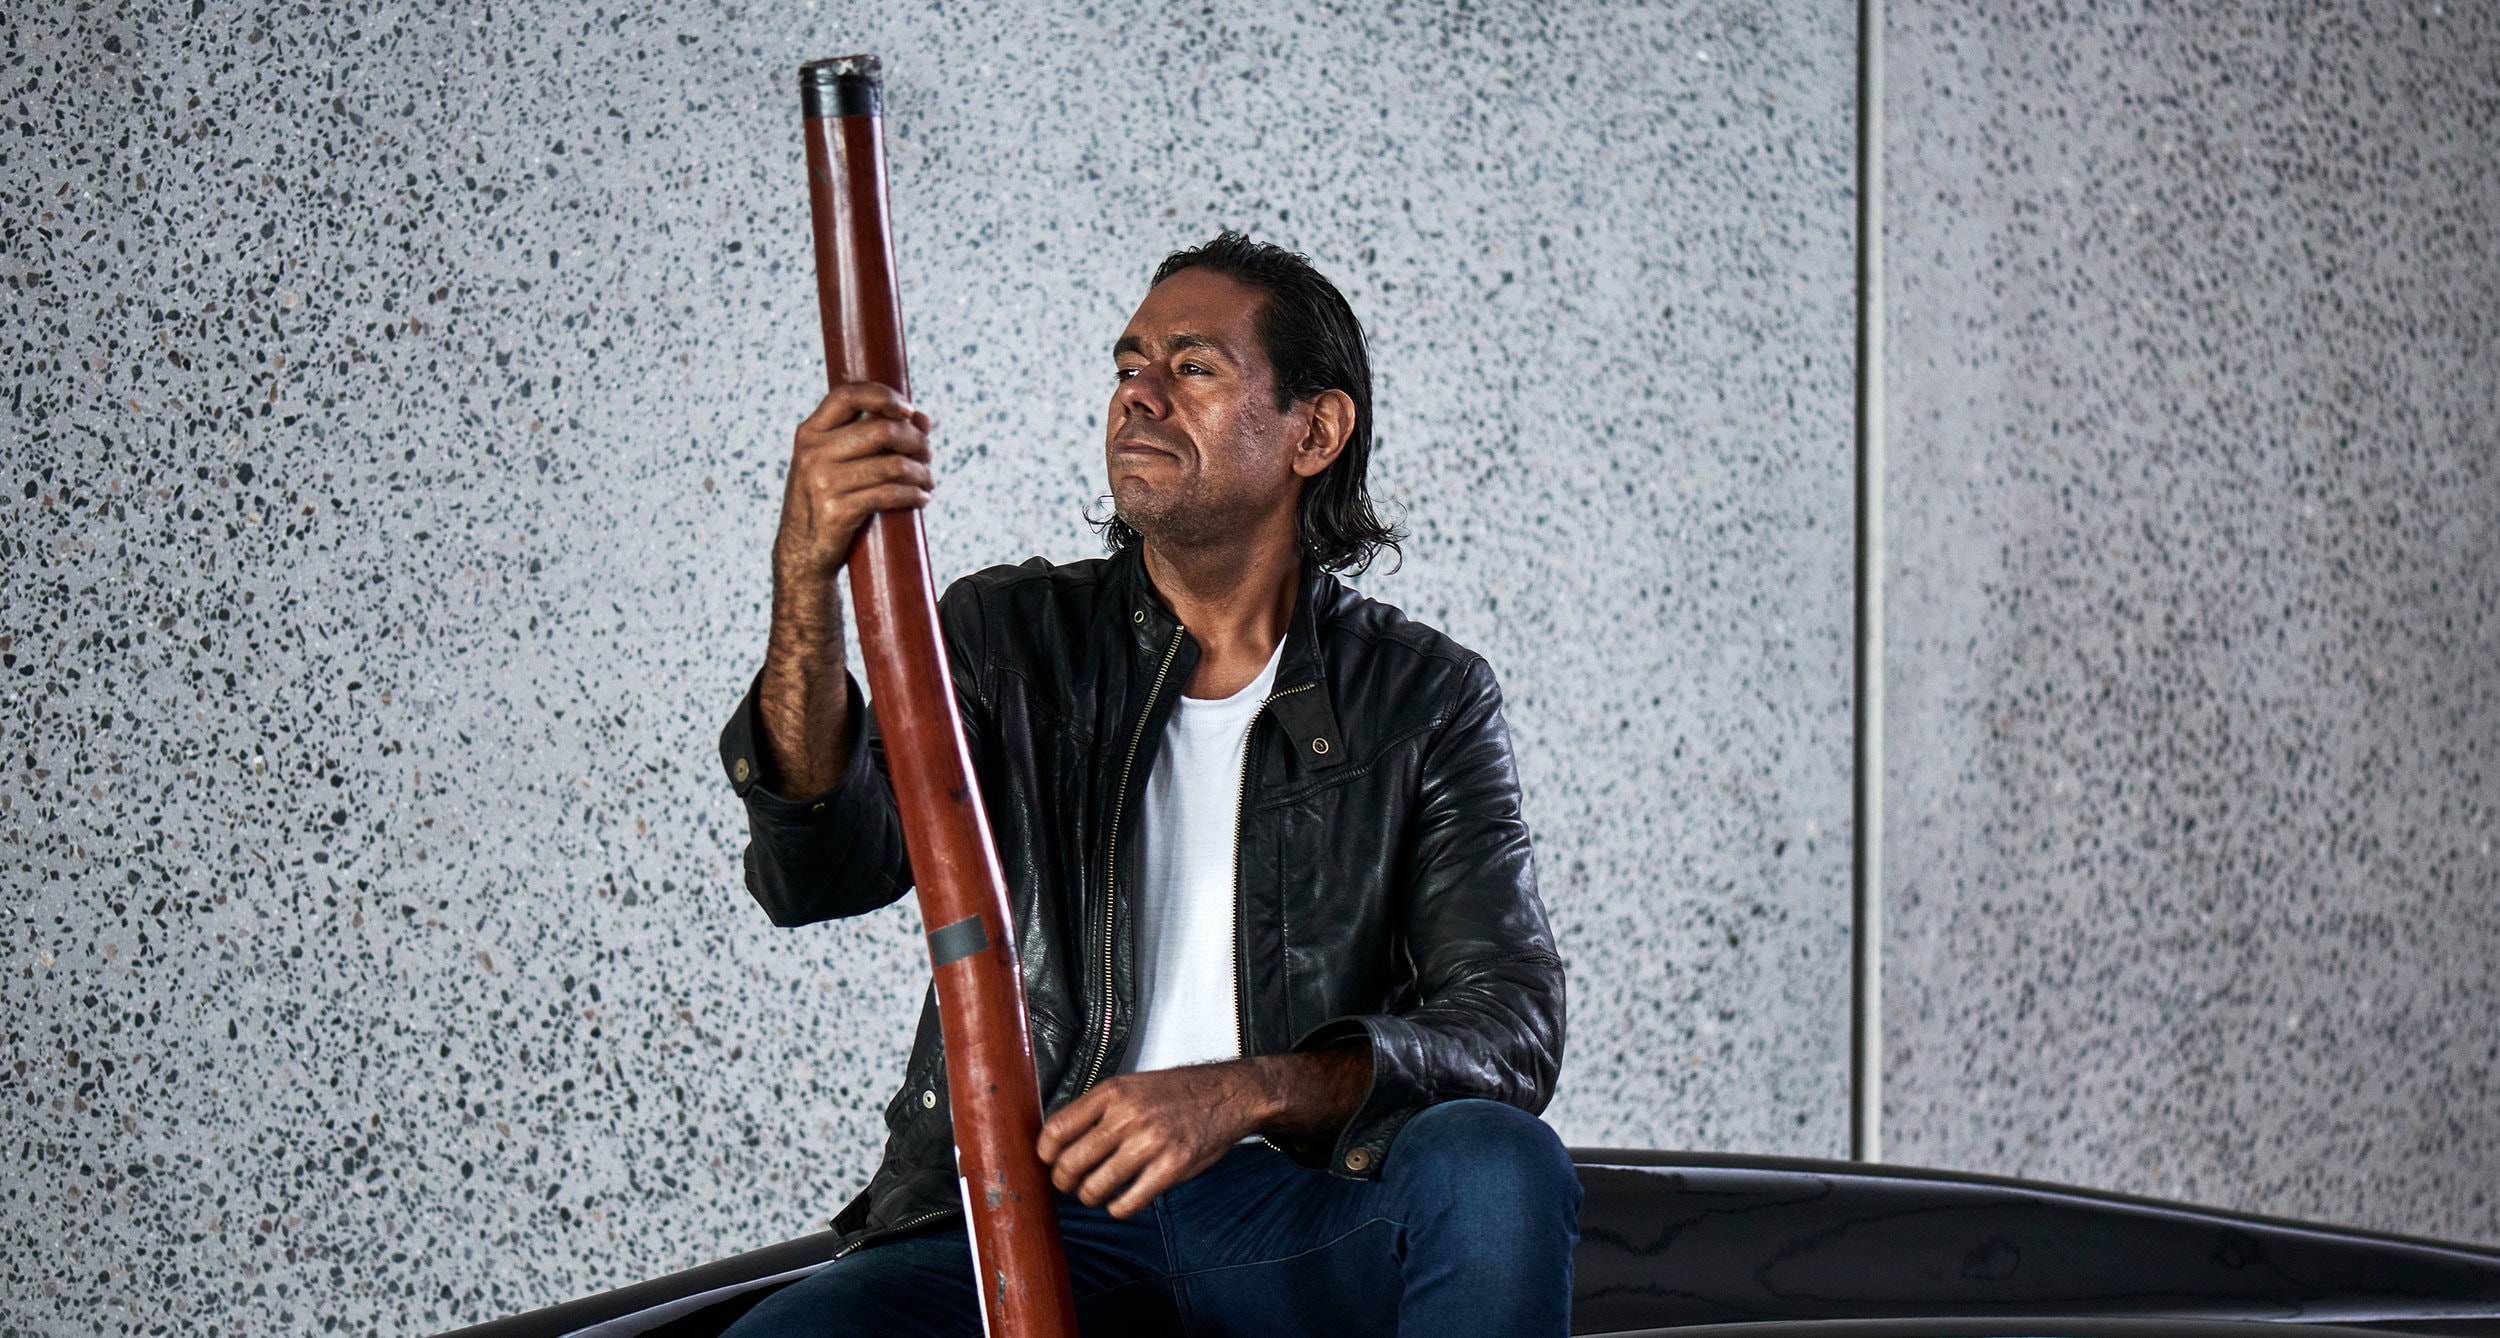 Featured image for “Kalkadunga didgeridoo player William Barton”